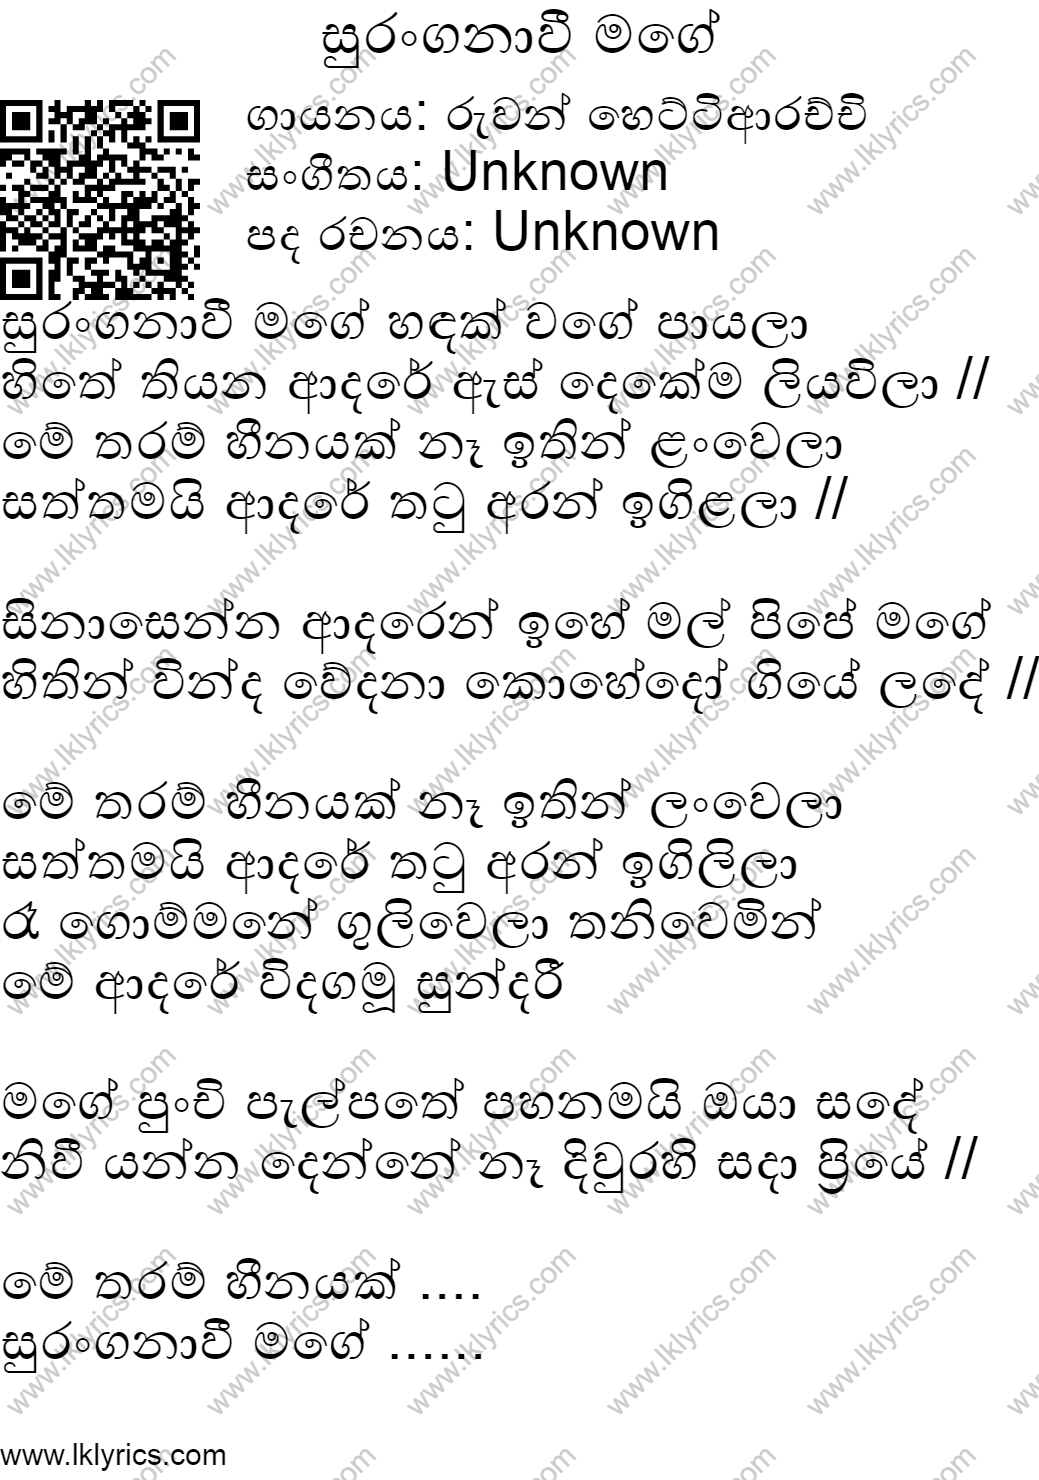 Suranganawi Mage Lyrics